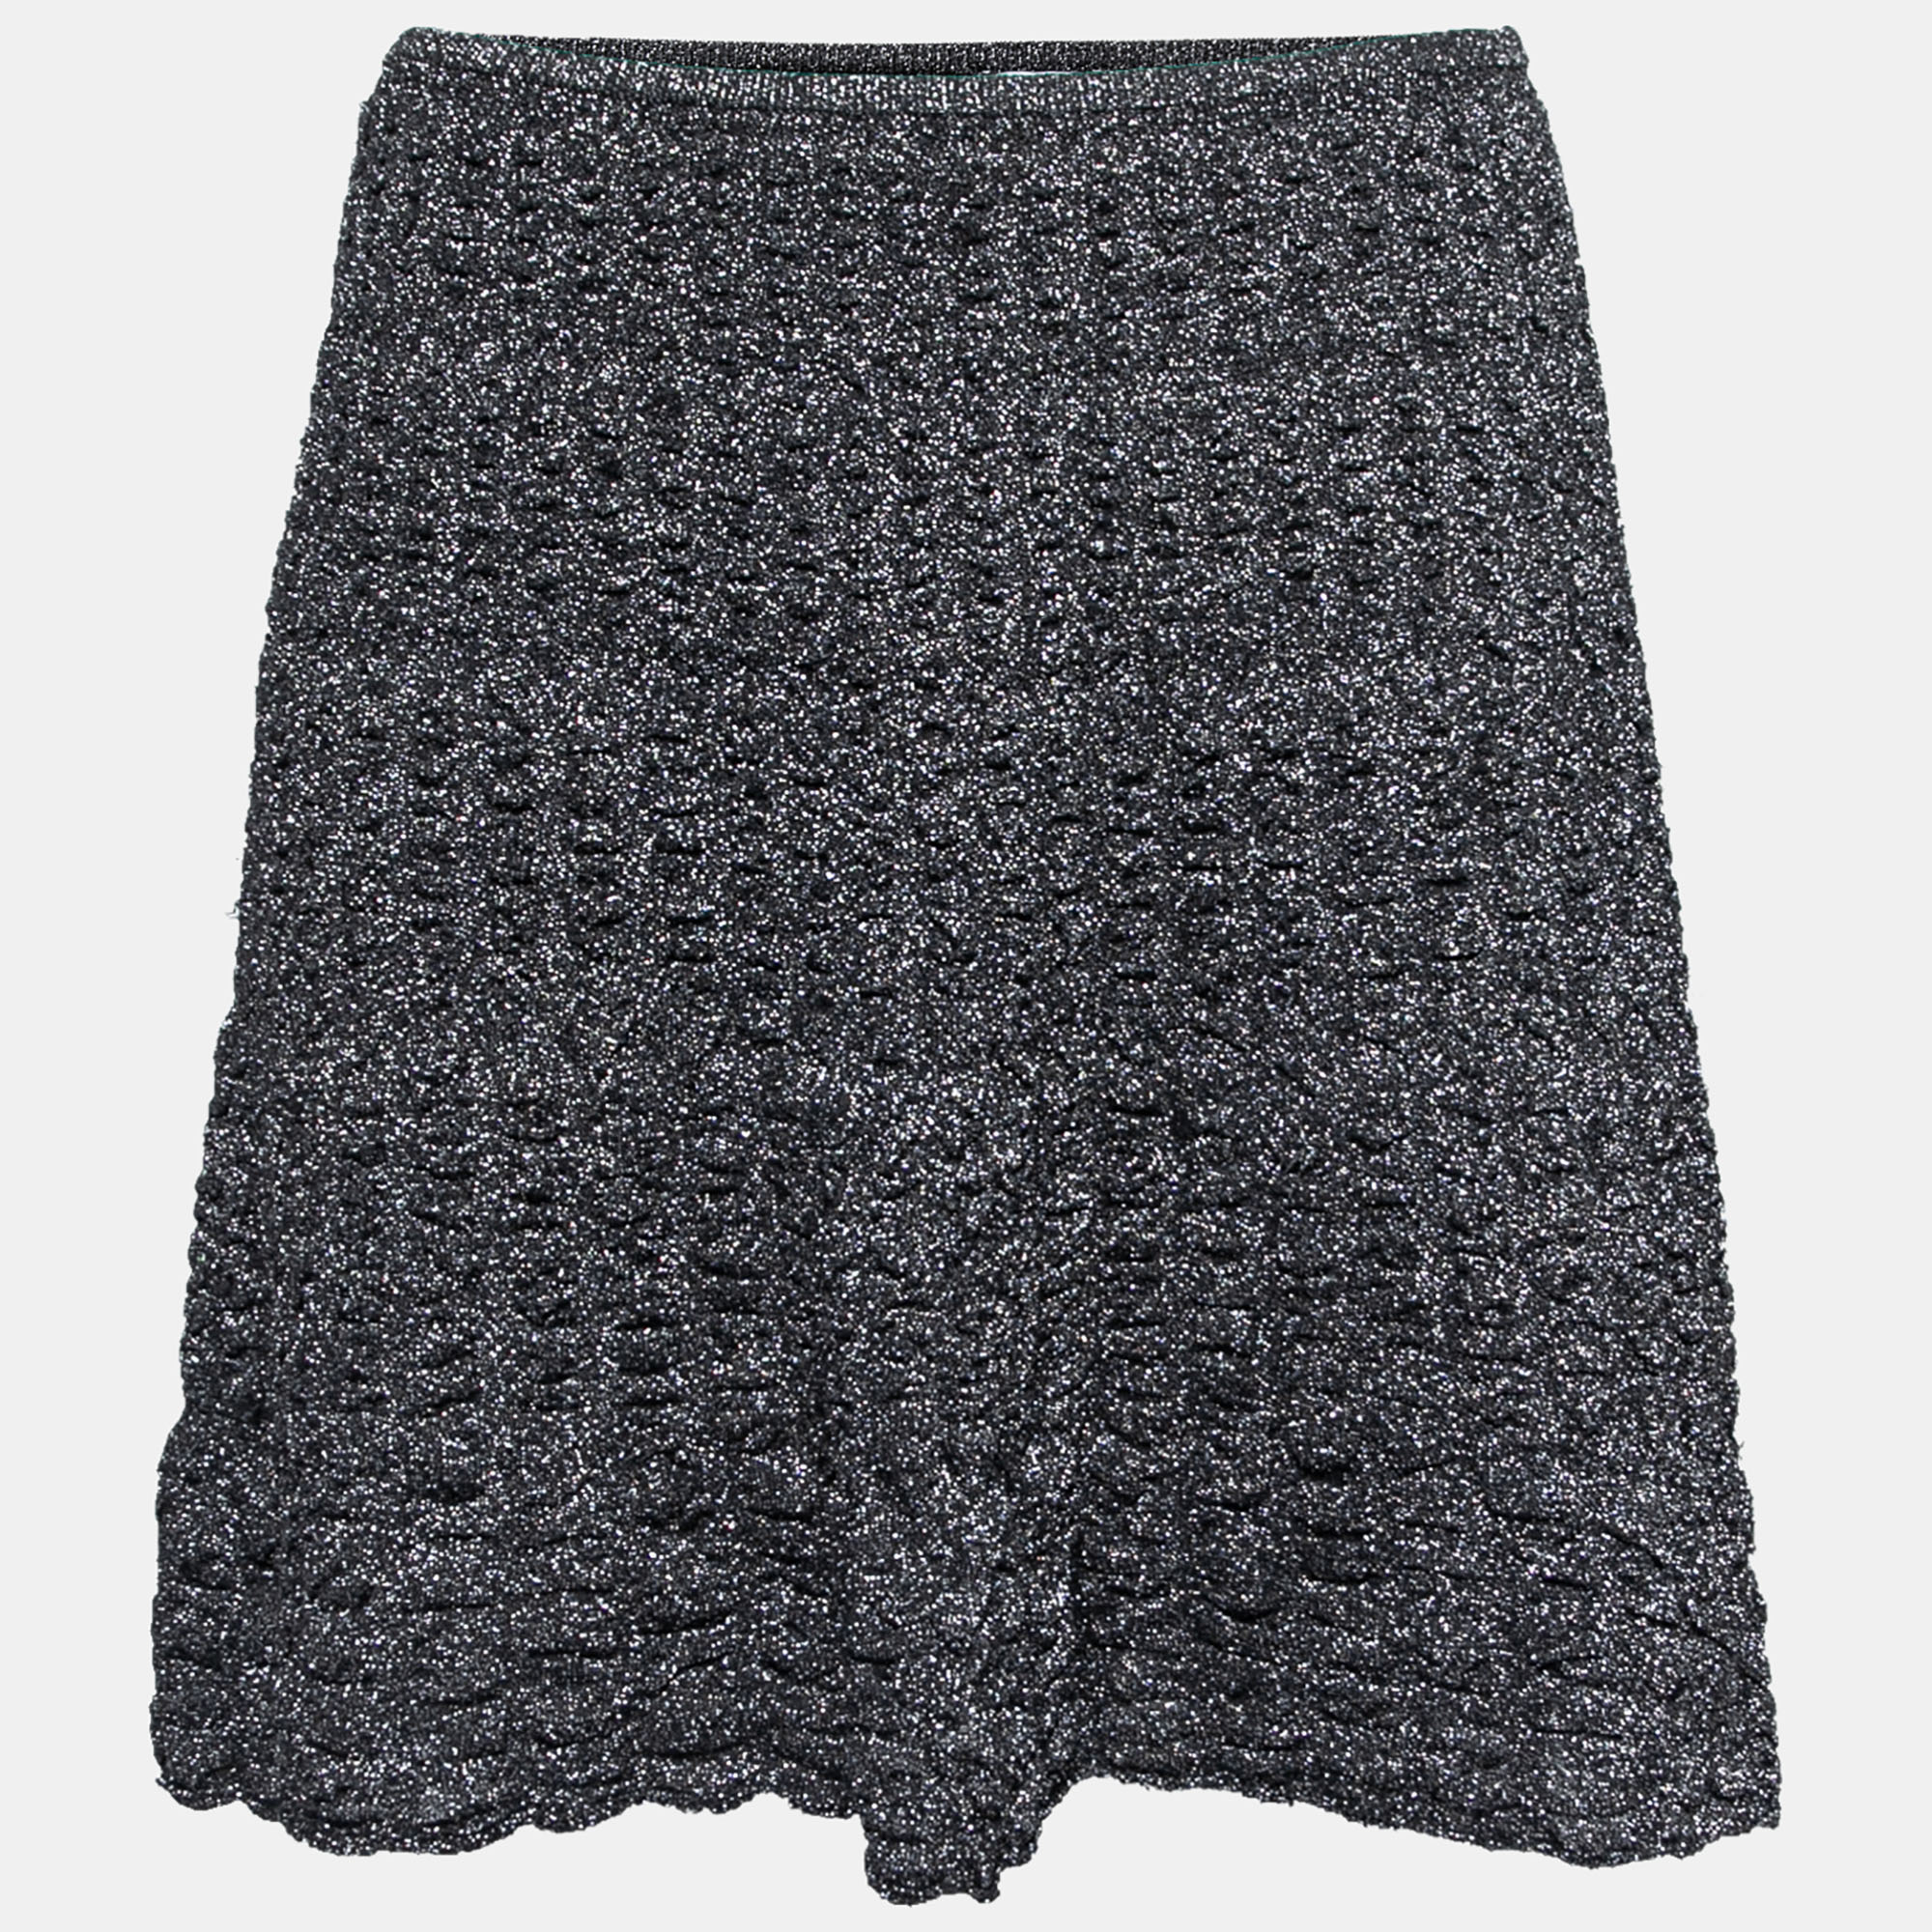 M Missoni Metallic Grey Lurex Knit Textured Flared Skirt S